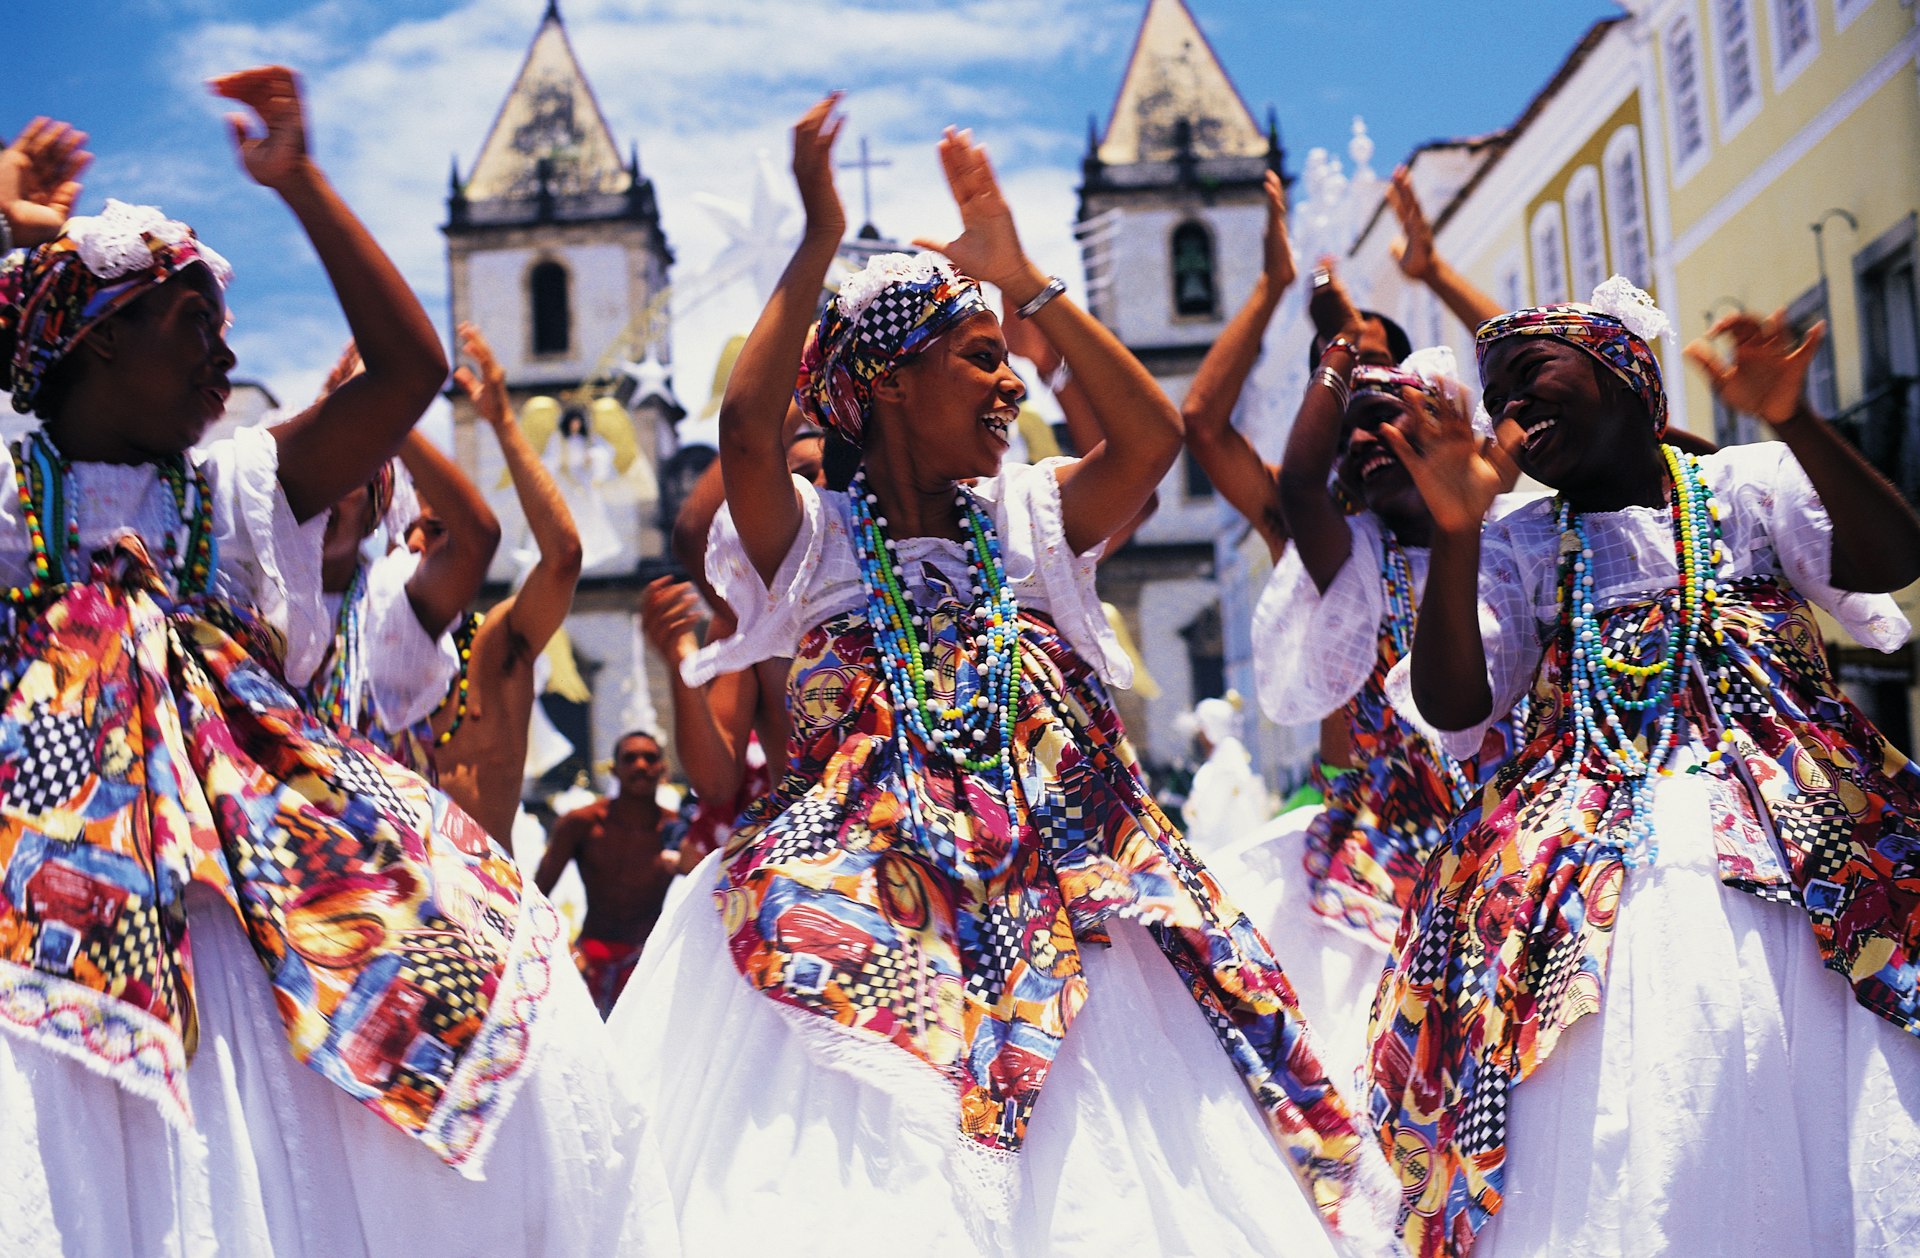 Dancers at a festival in Salvador, Brazil